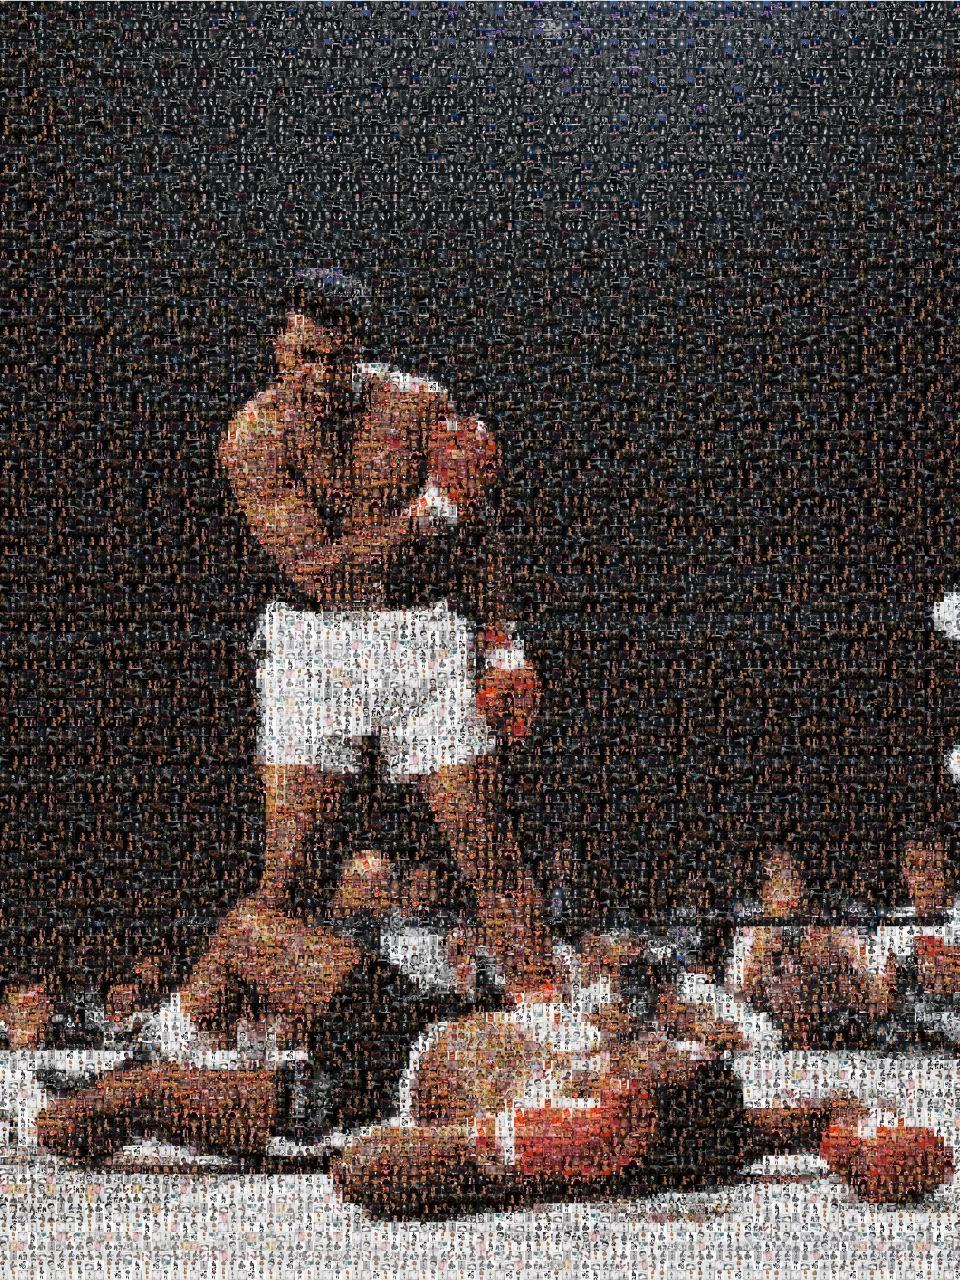 Destro Black and White Photograph - "Ali" Muhammad Ali Portrait 36x48  Photomosaic Photography Pop Art  Unsigned